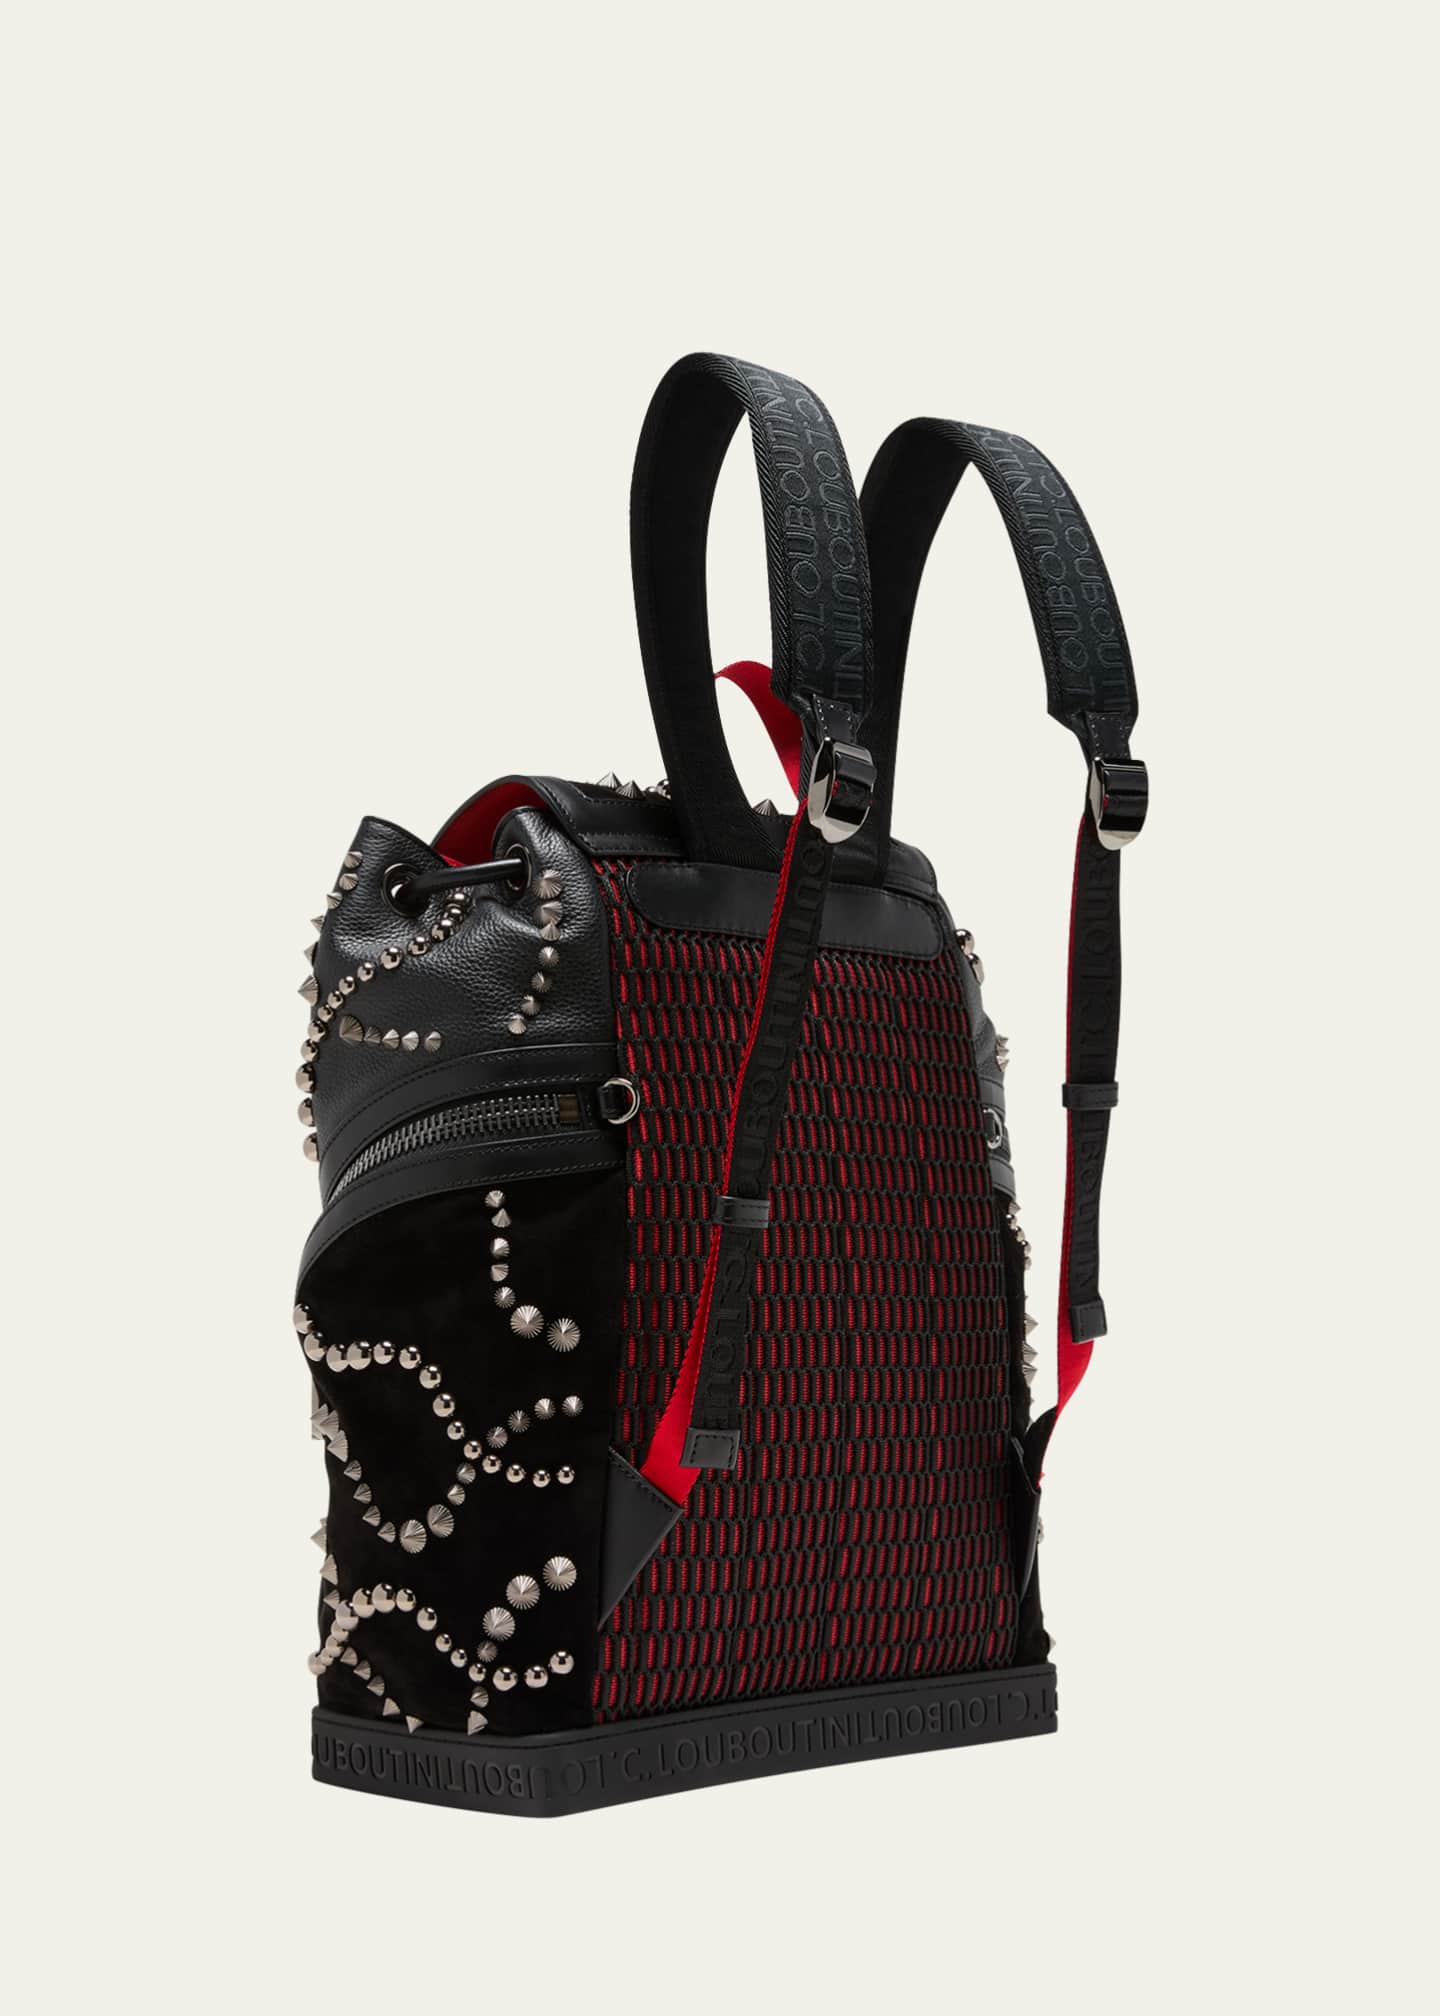 Christian Louboutin Explorafunk Studded Leather Backpack